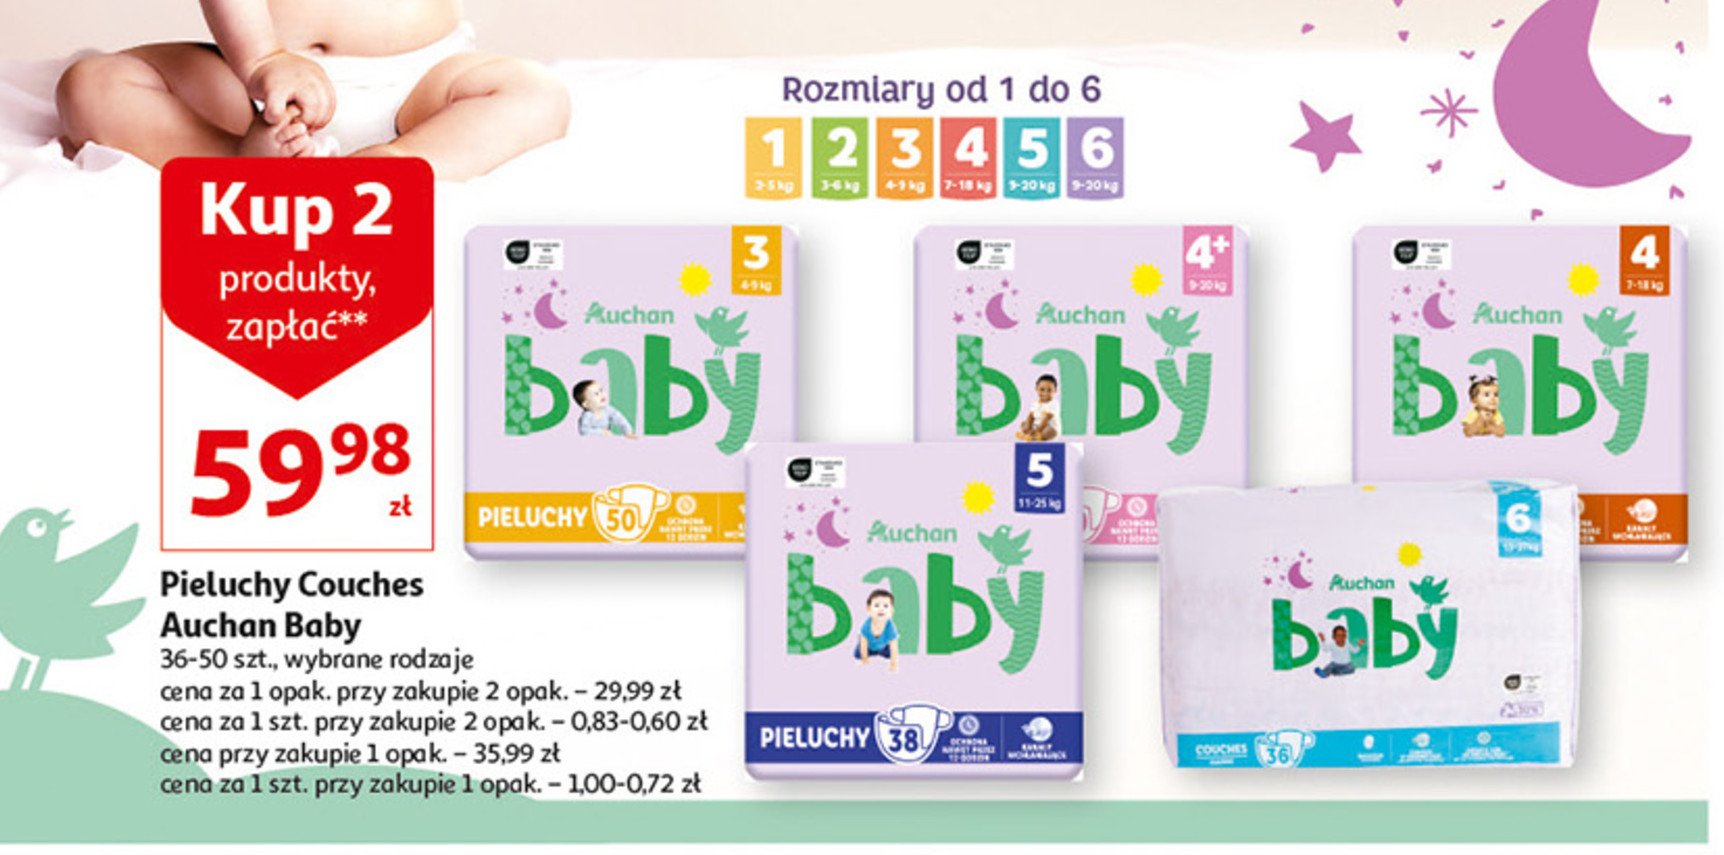 Pieluchy 4+ Auchan baby promocja